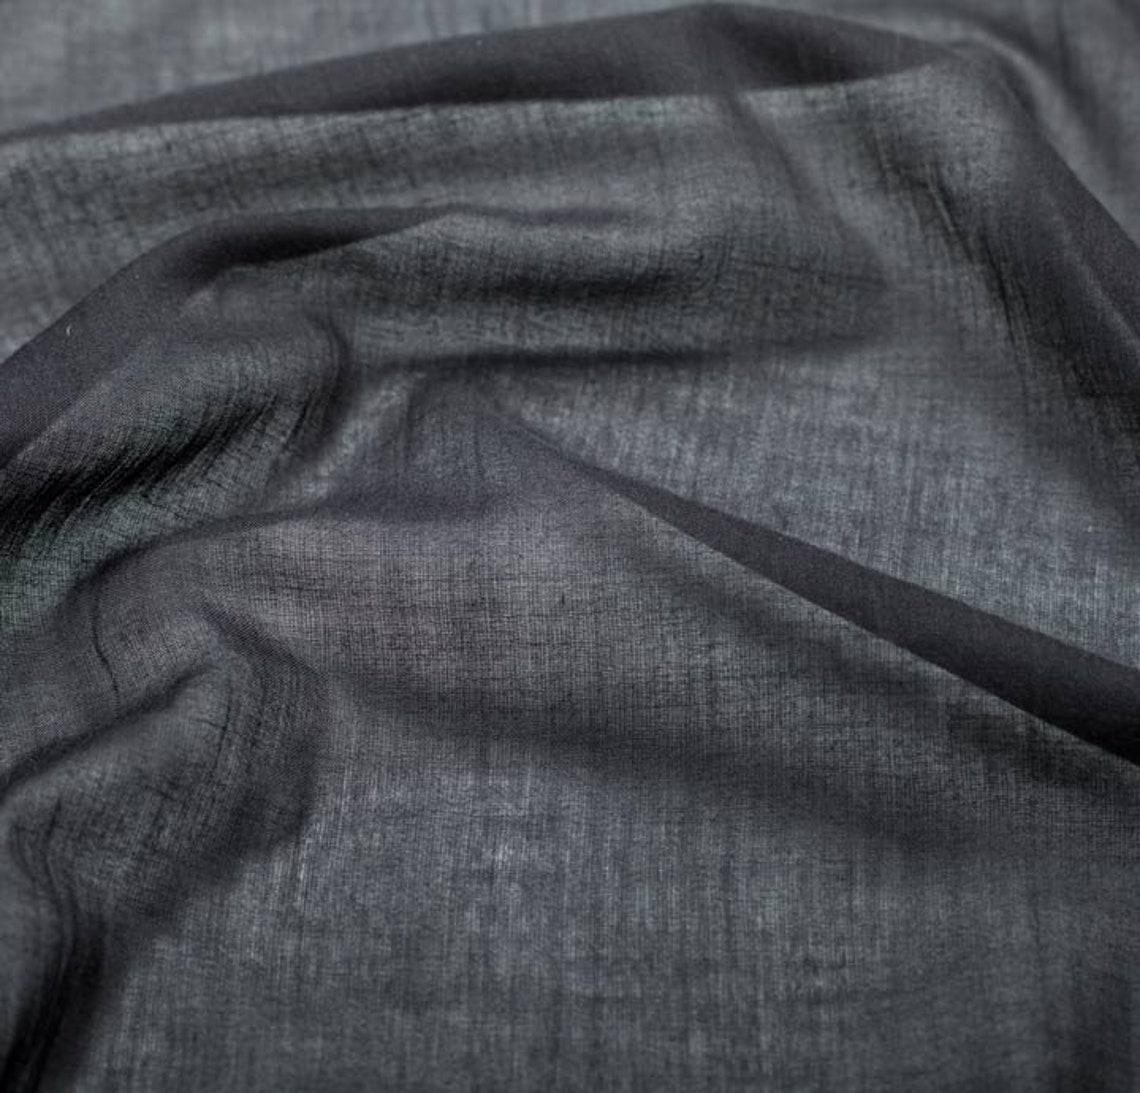 100% Cotton Fabric Black Fabric Voile Fabric Fashion | Etsy